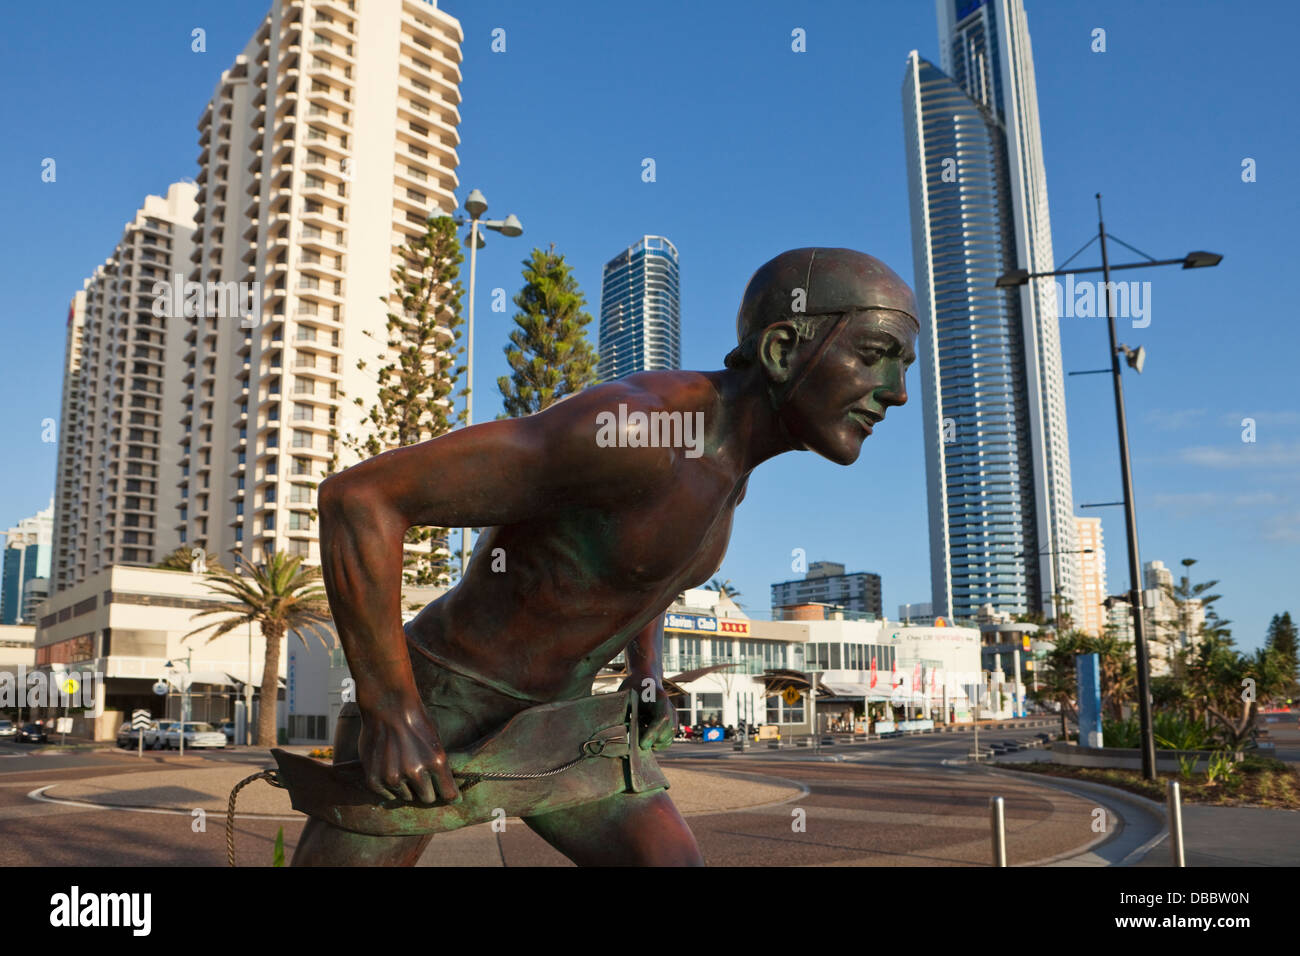 Surf lifesaving statue at Surfers Paradise, Gold Coast, Queensland, Australia Stock Photo